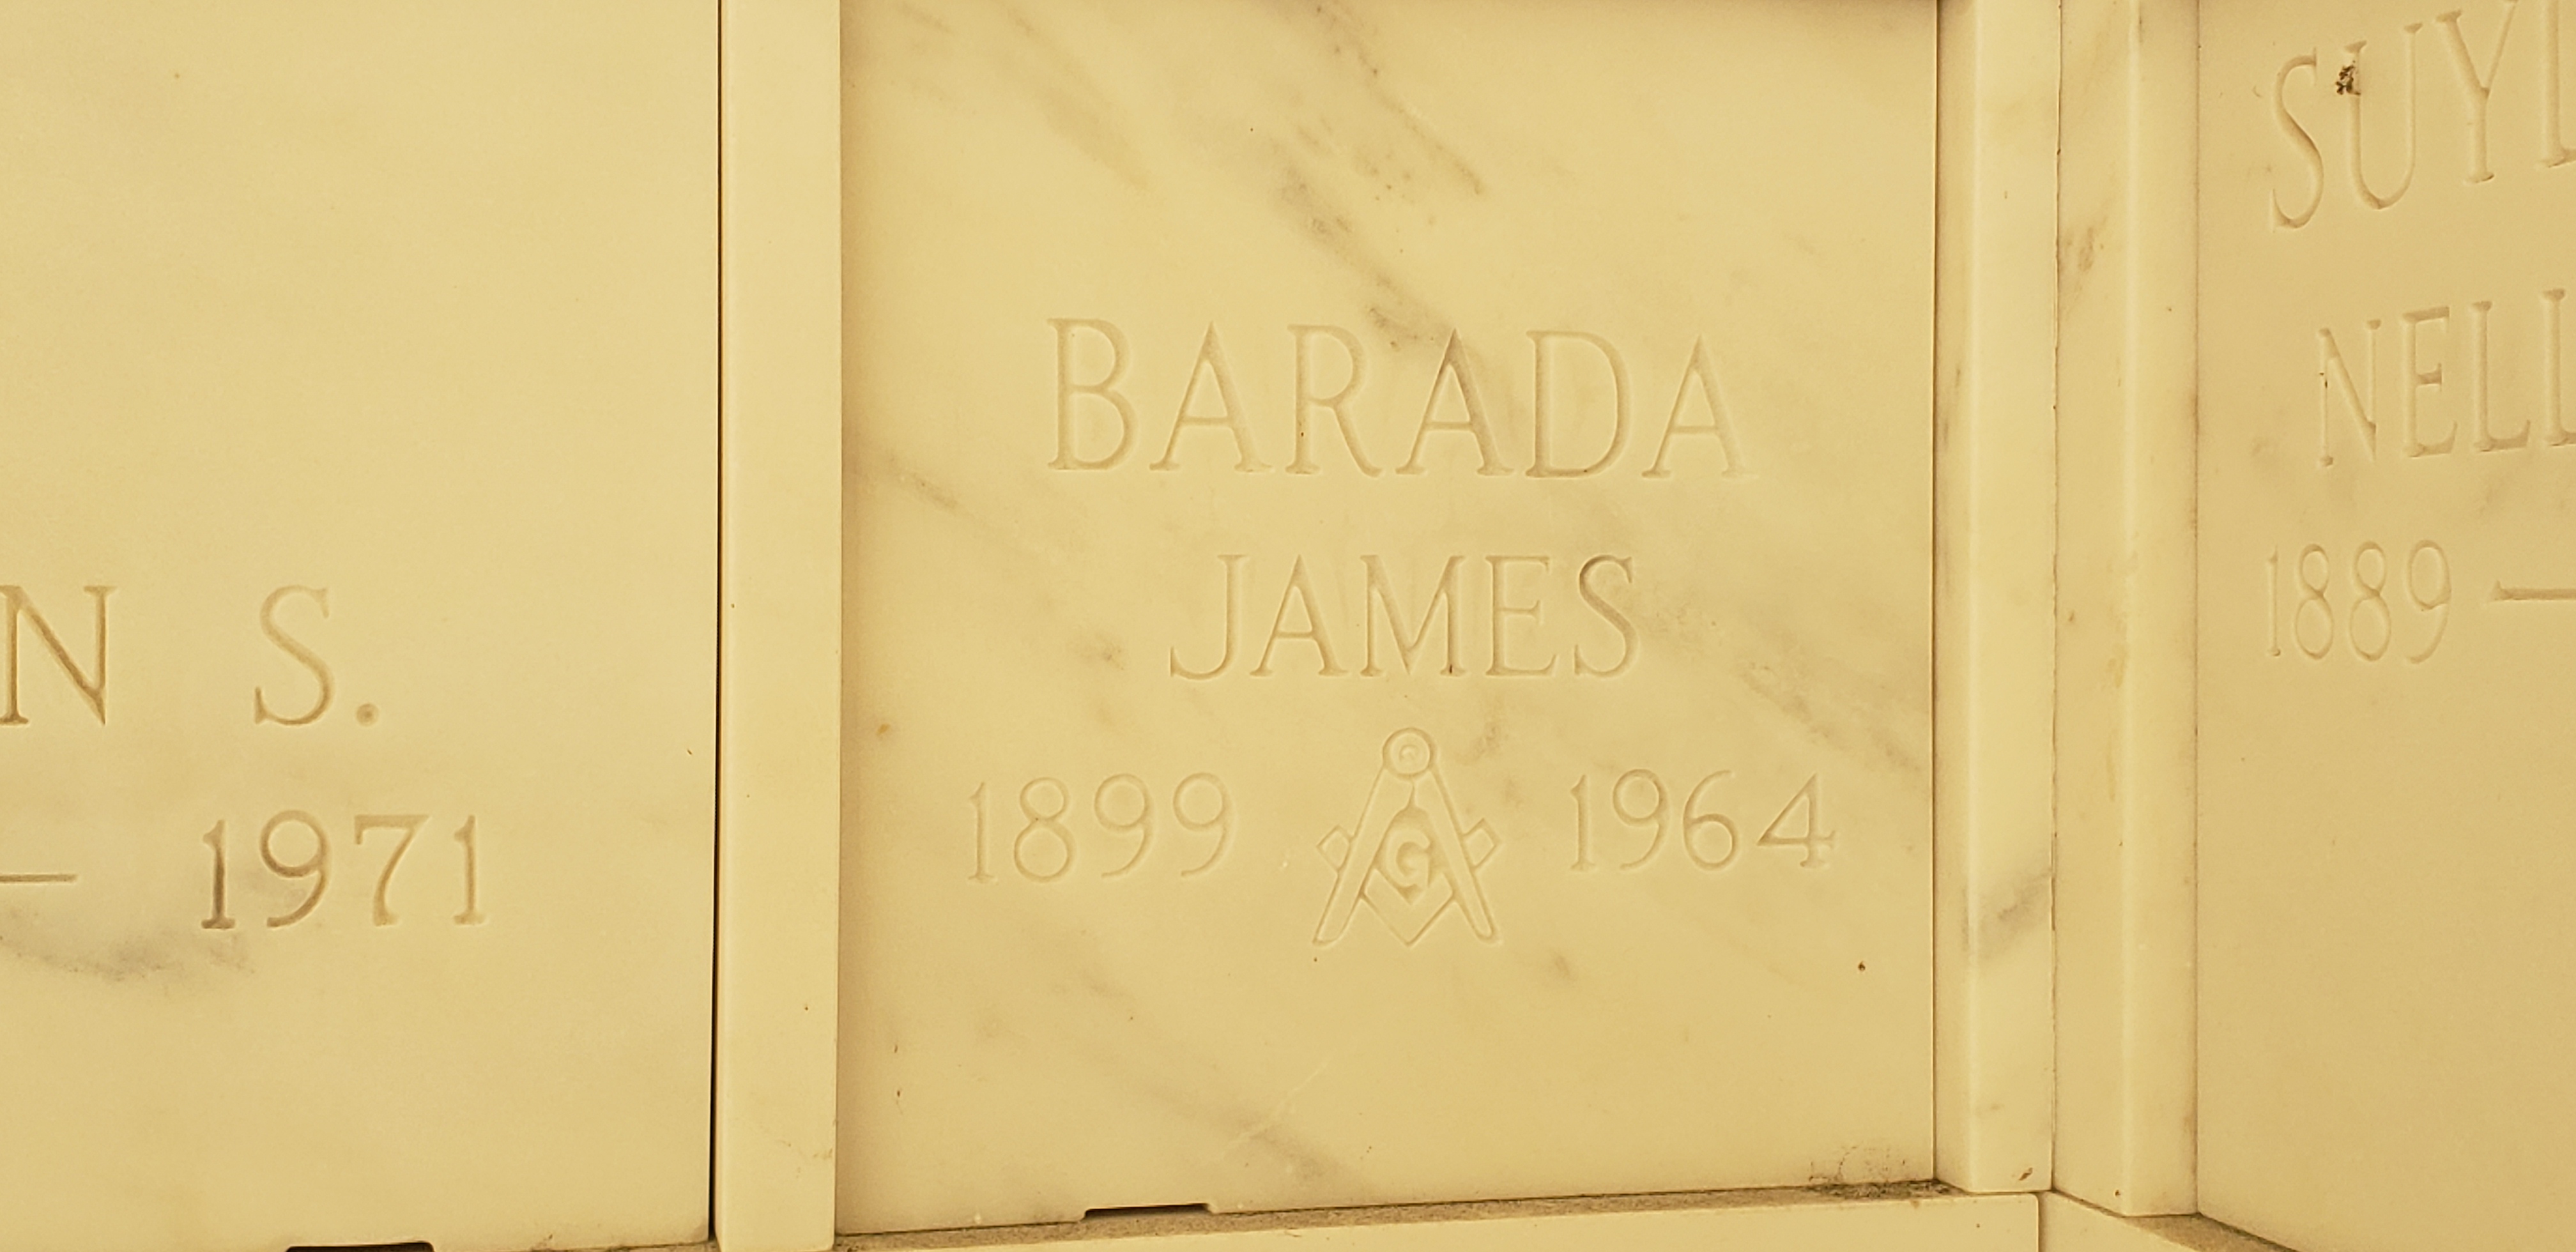 James Barada